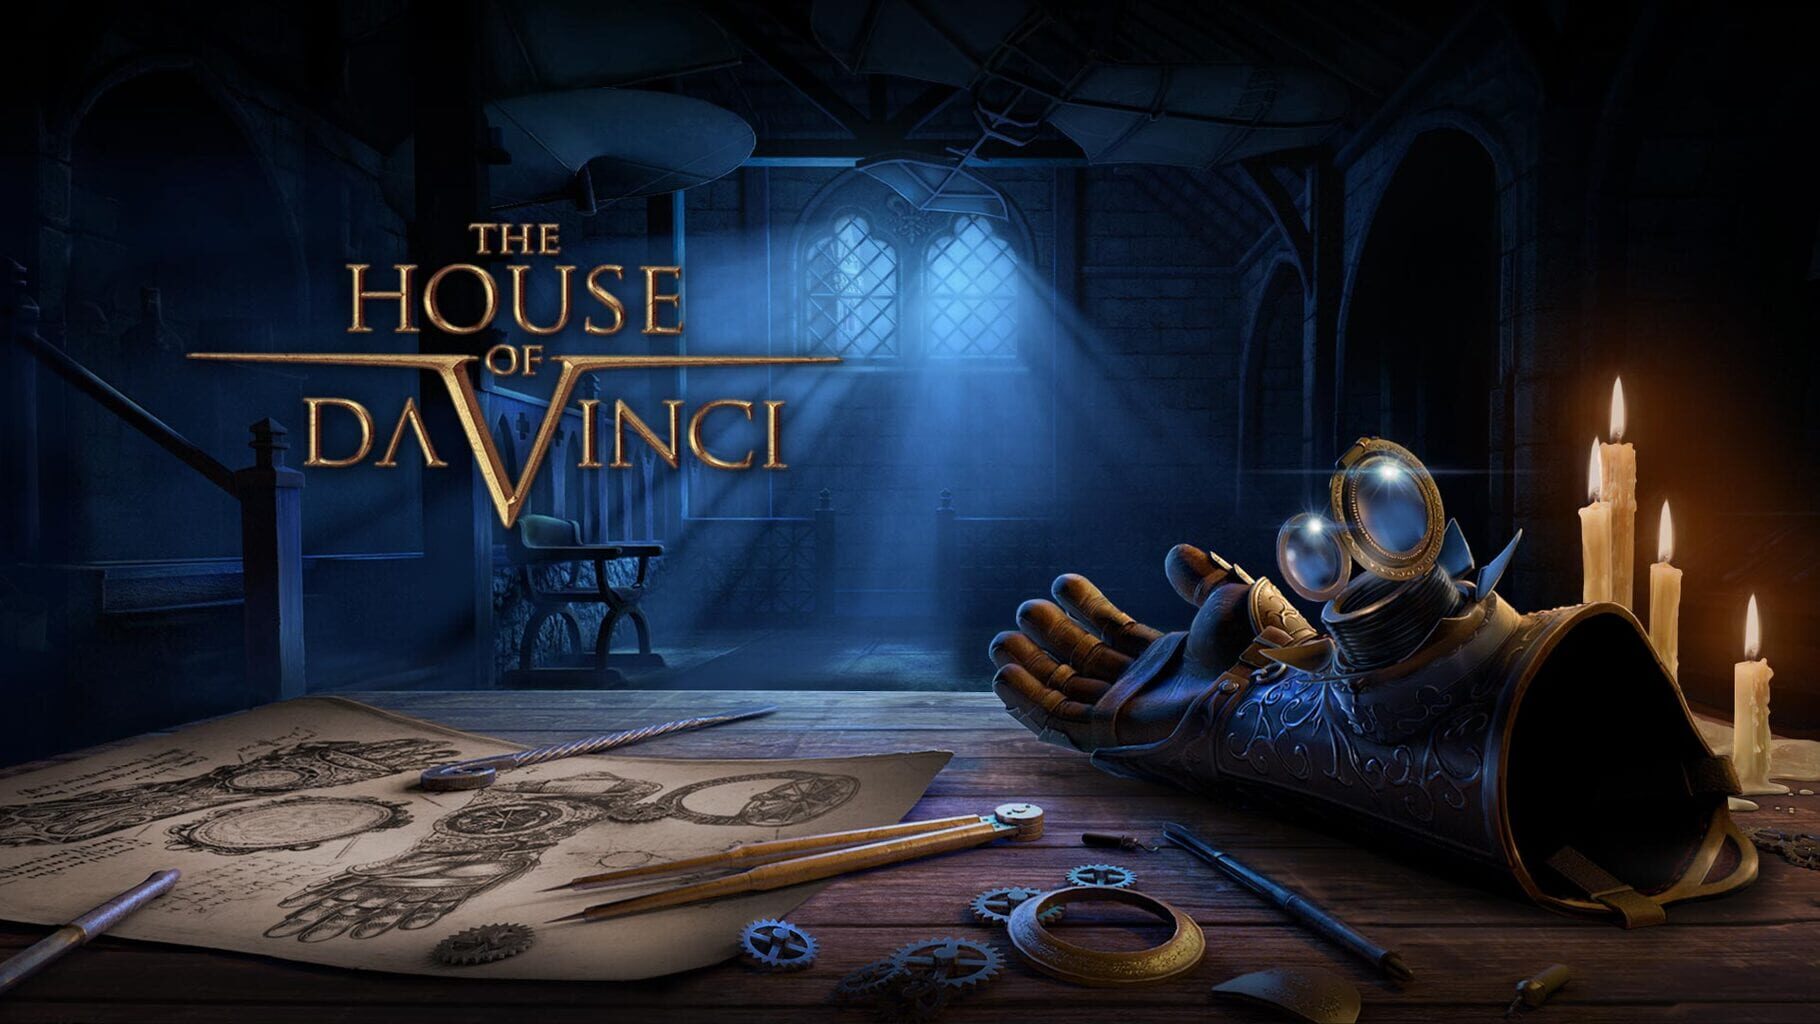 The House of Da Vinci artwork